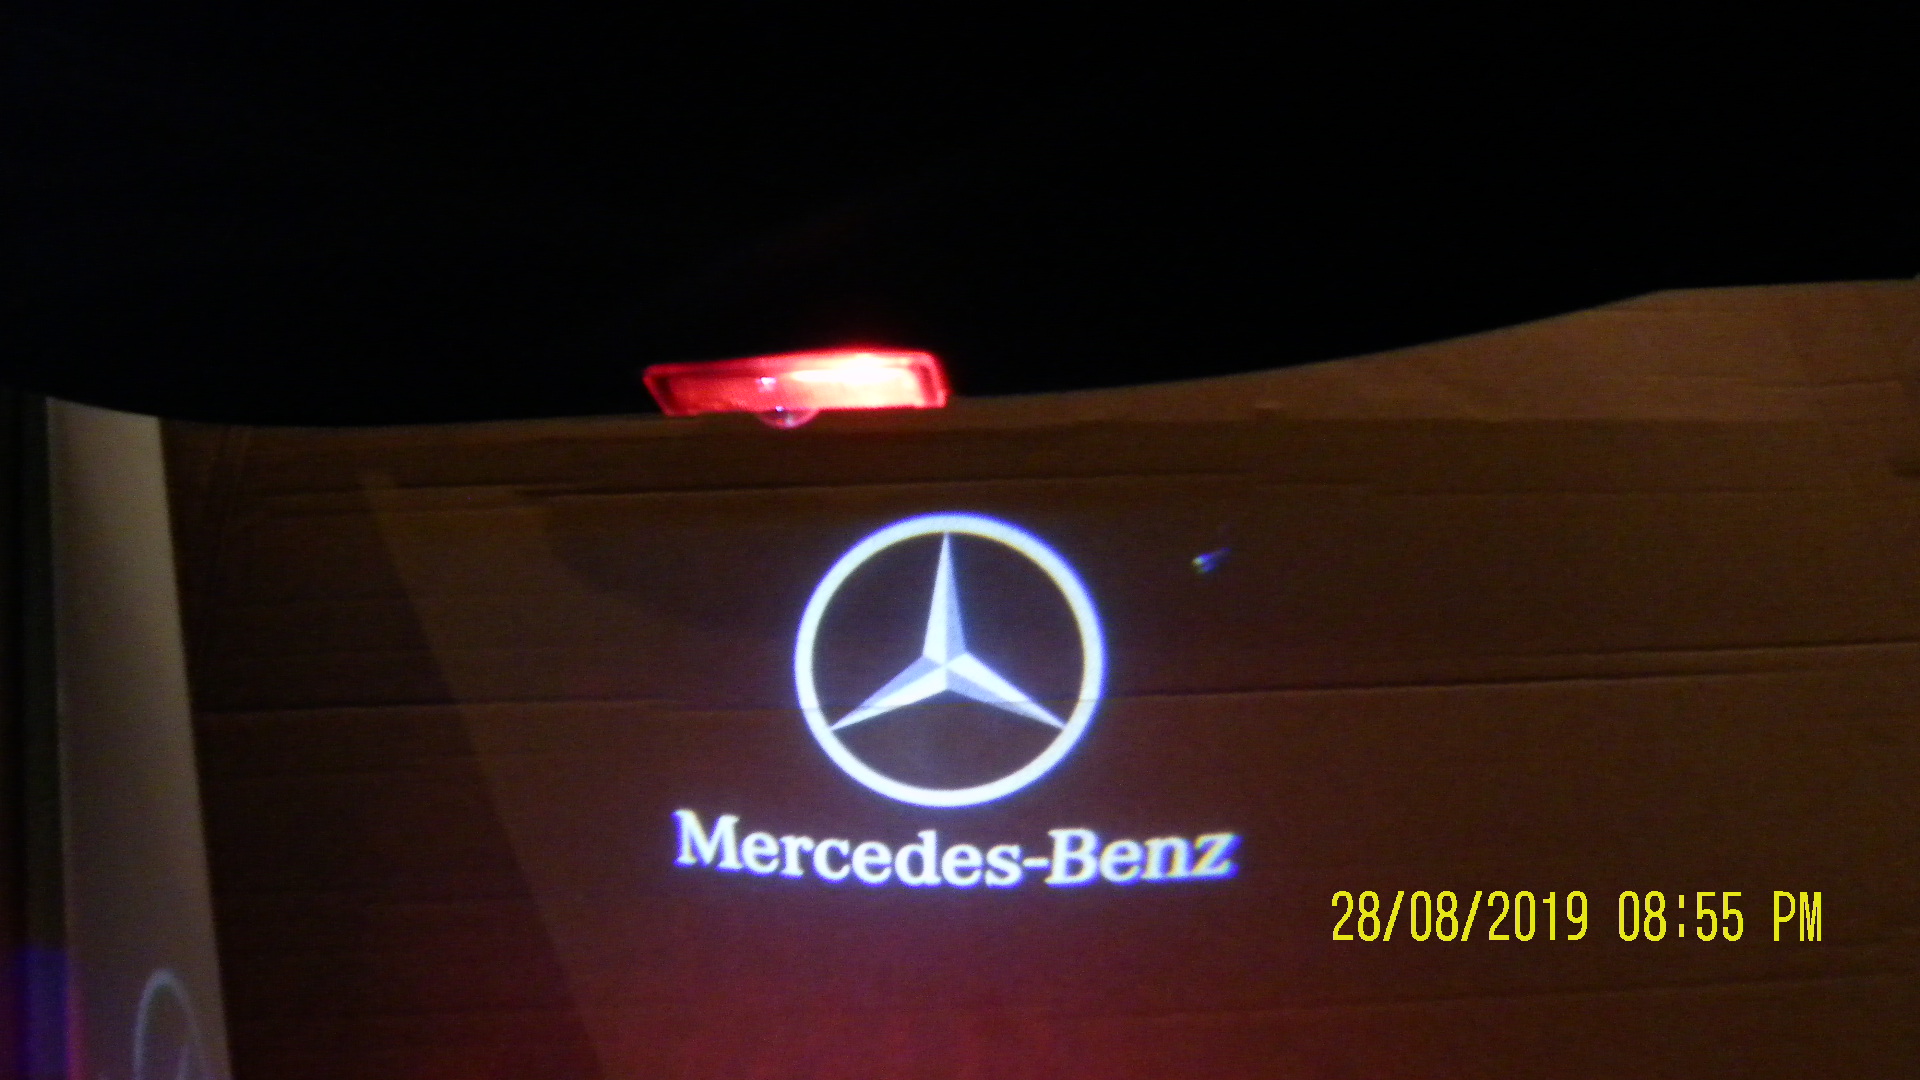 MERCEDES-BENZ - LOGO LED LAMP